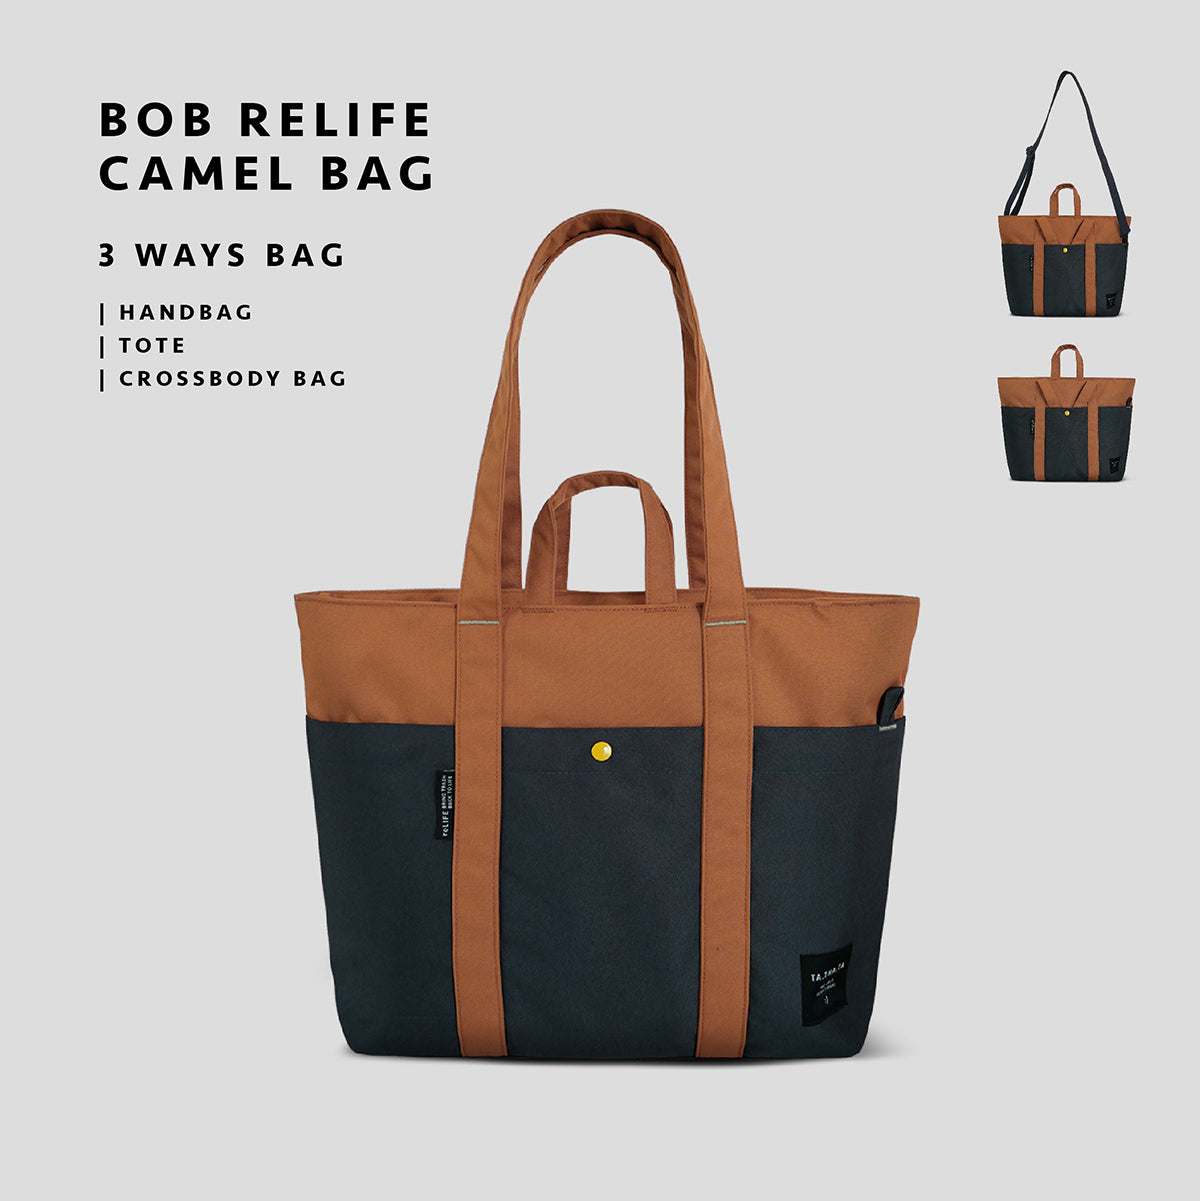 Bob relife camel bag